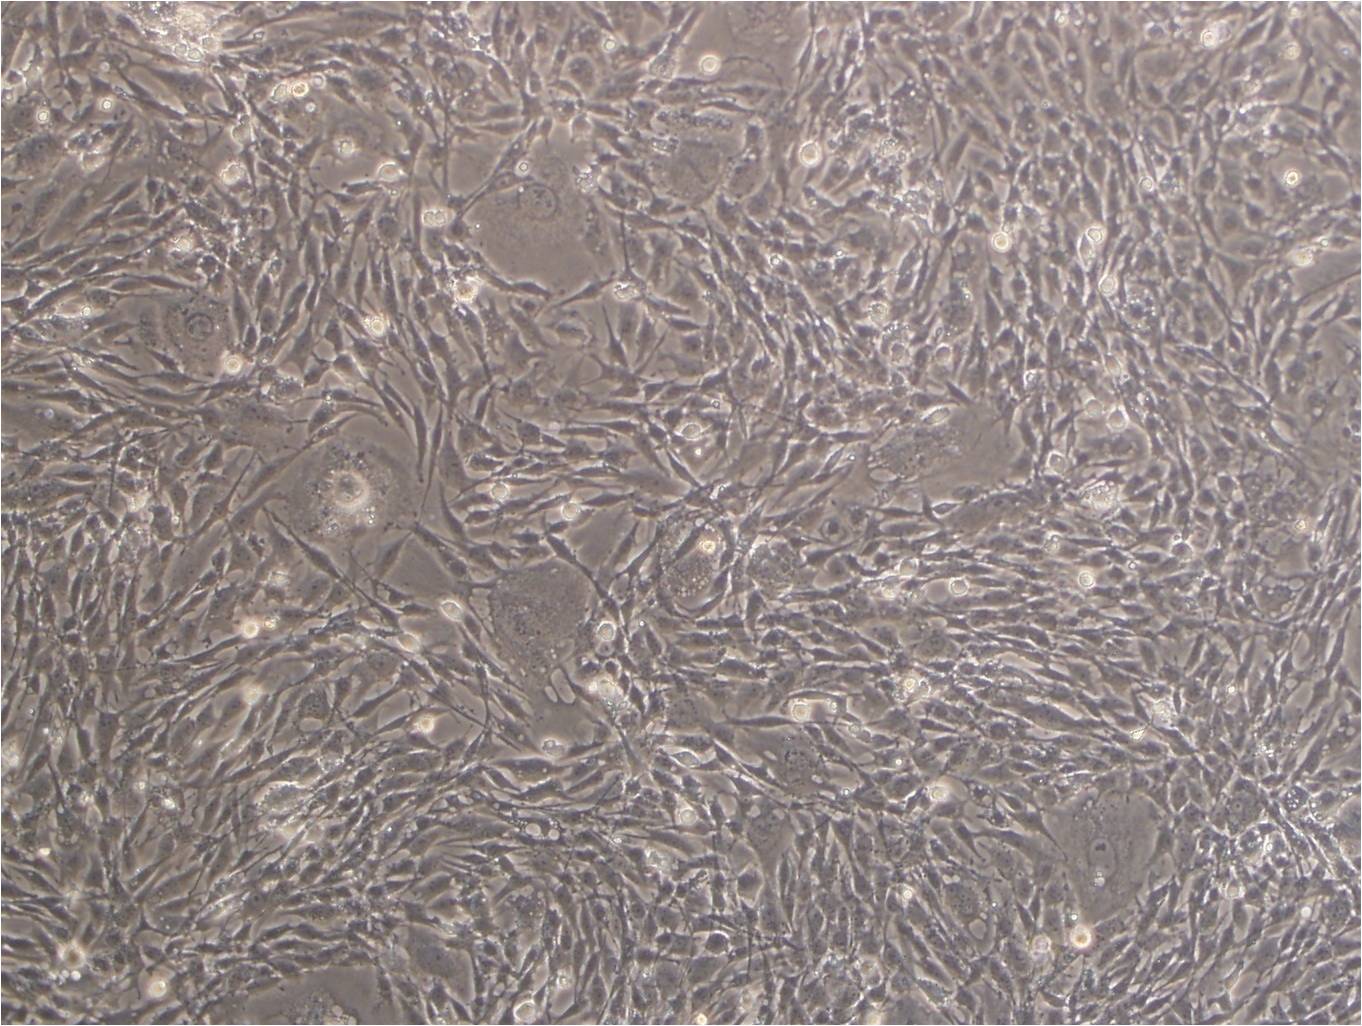 CX-1 epithelioid cells人大肠癌细胞系,CX-1 epithelioid cells